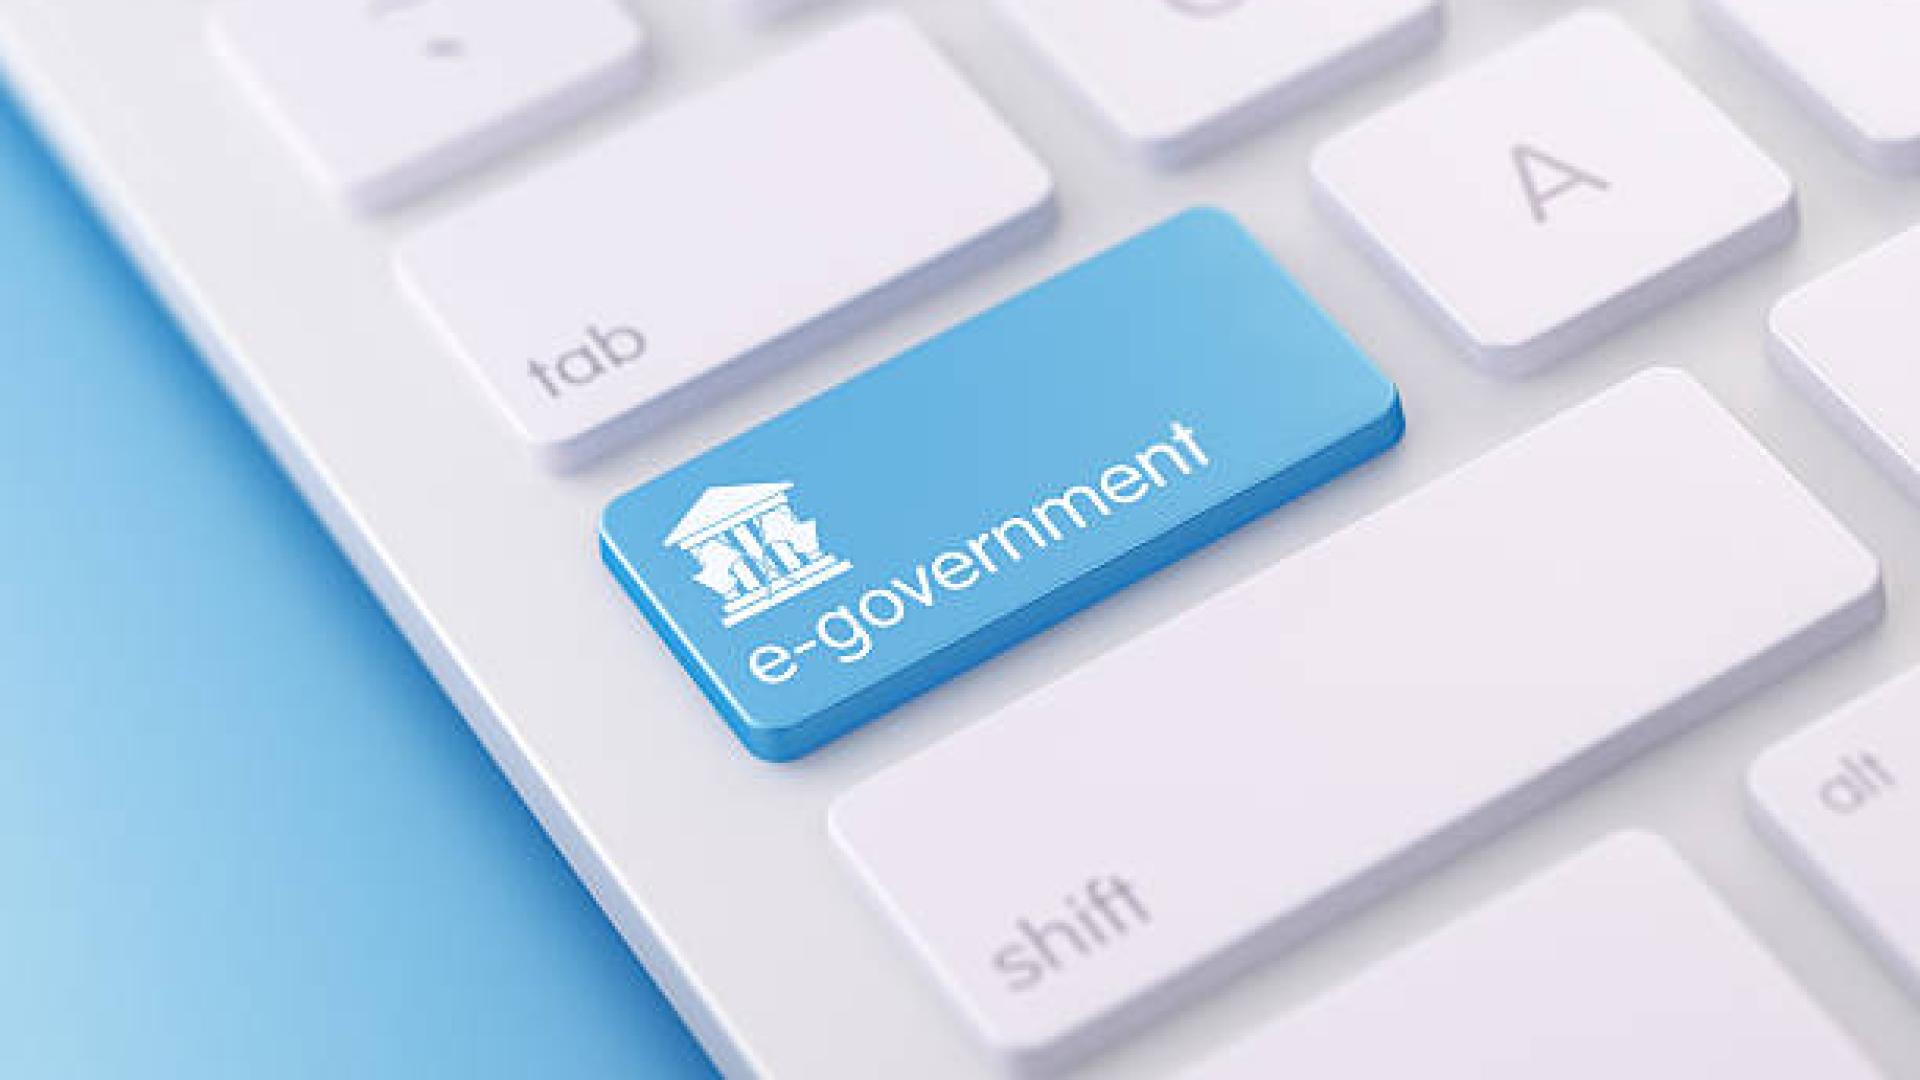 e-government